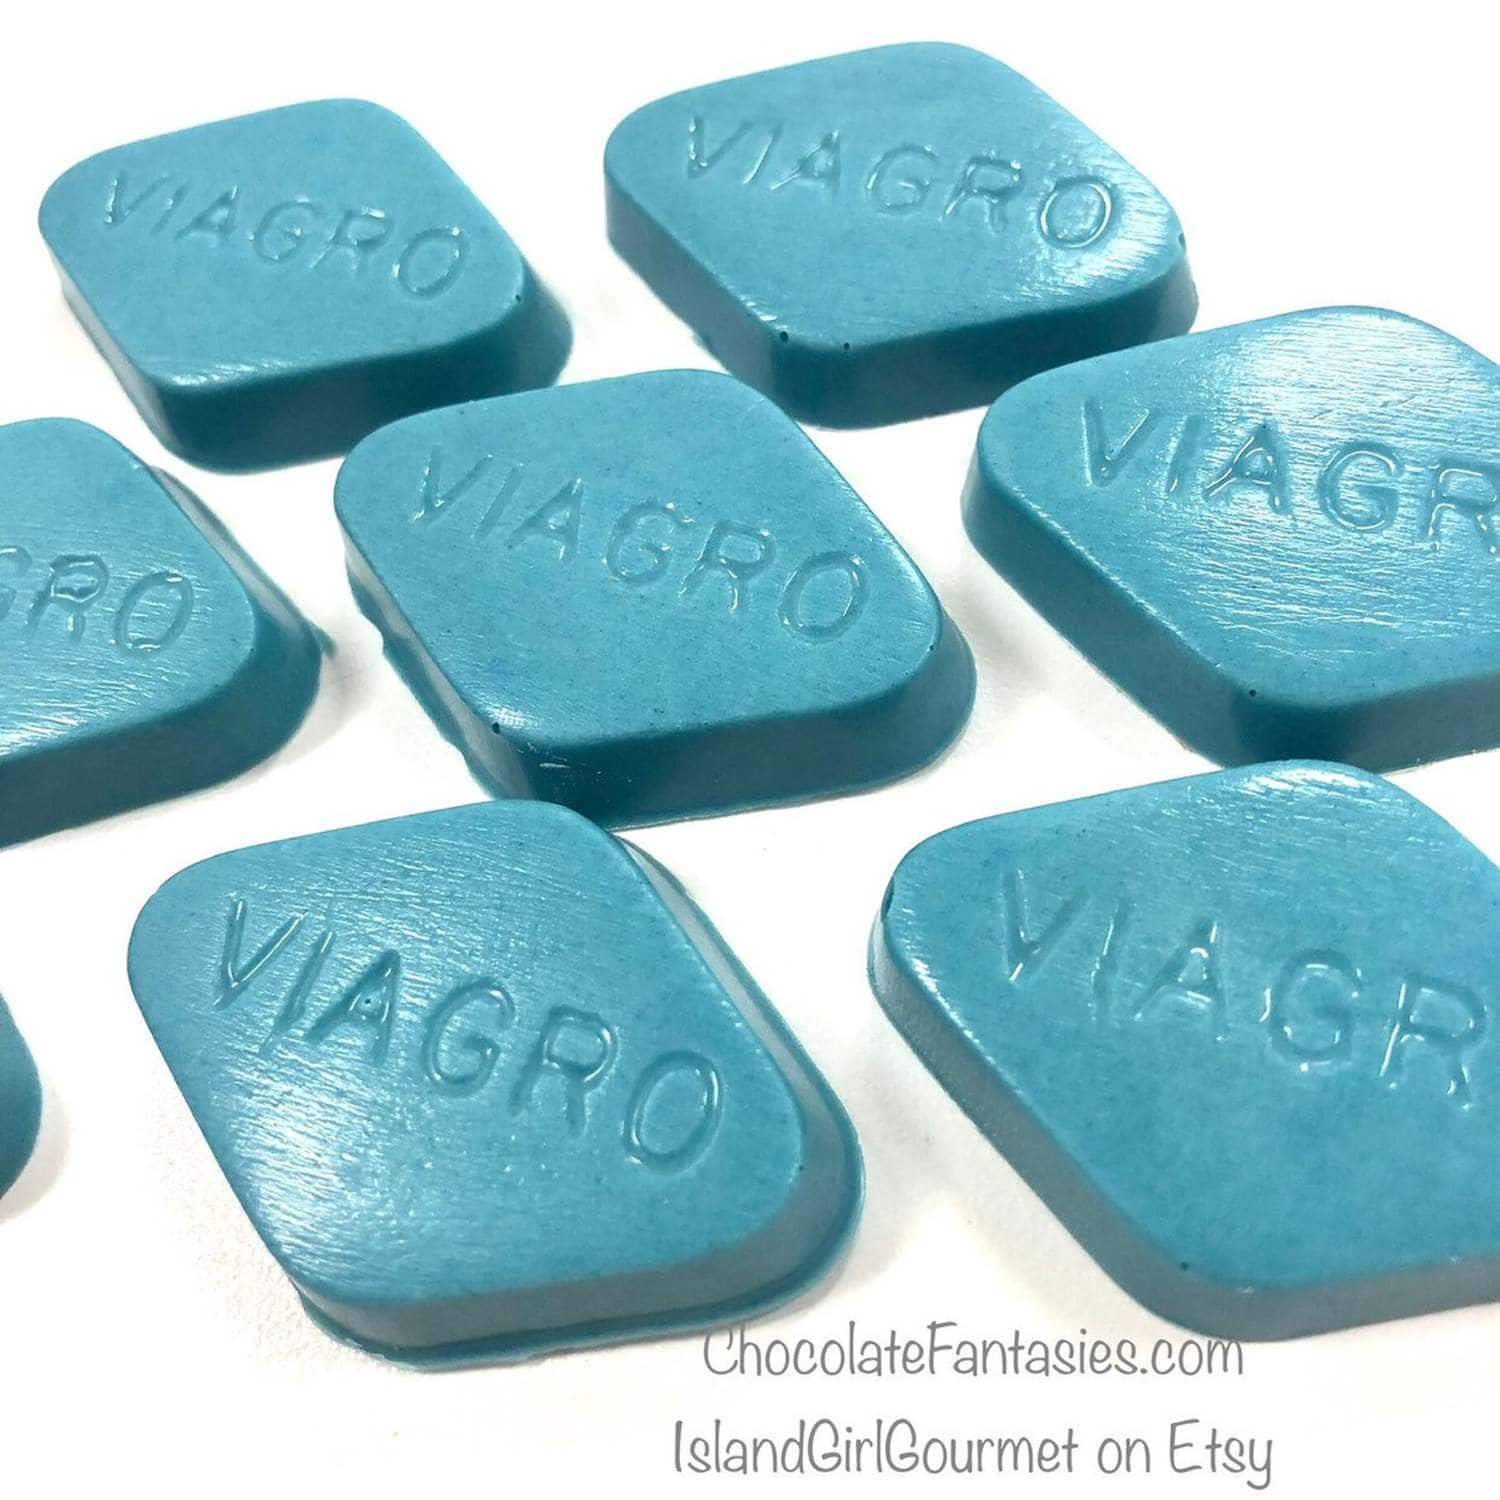 Chocolate “Viagro” shaped pills. 